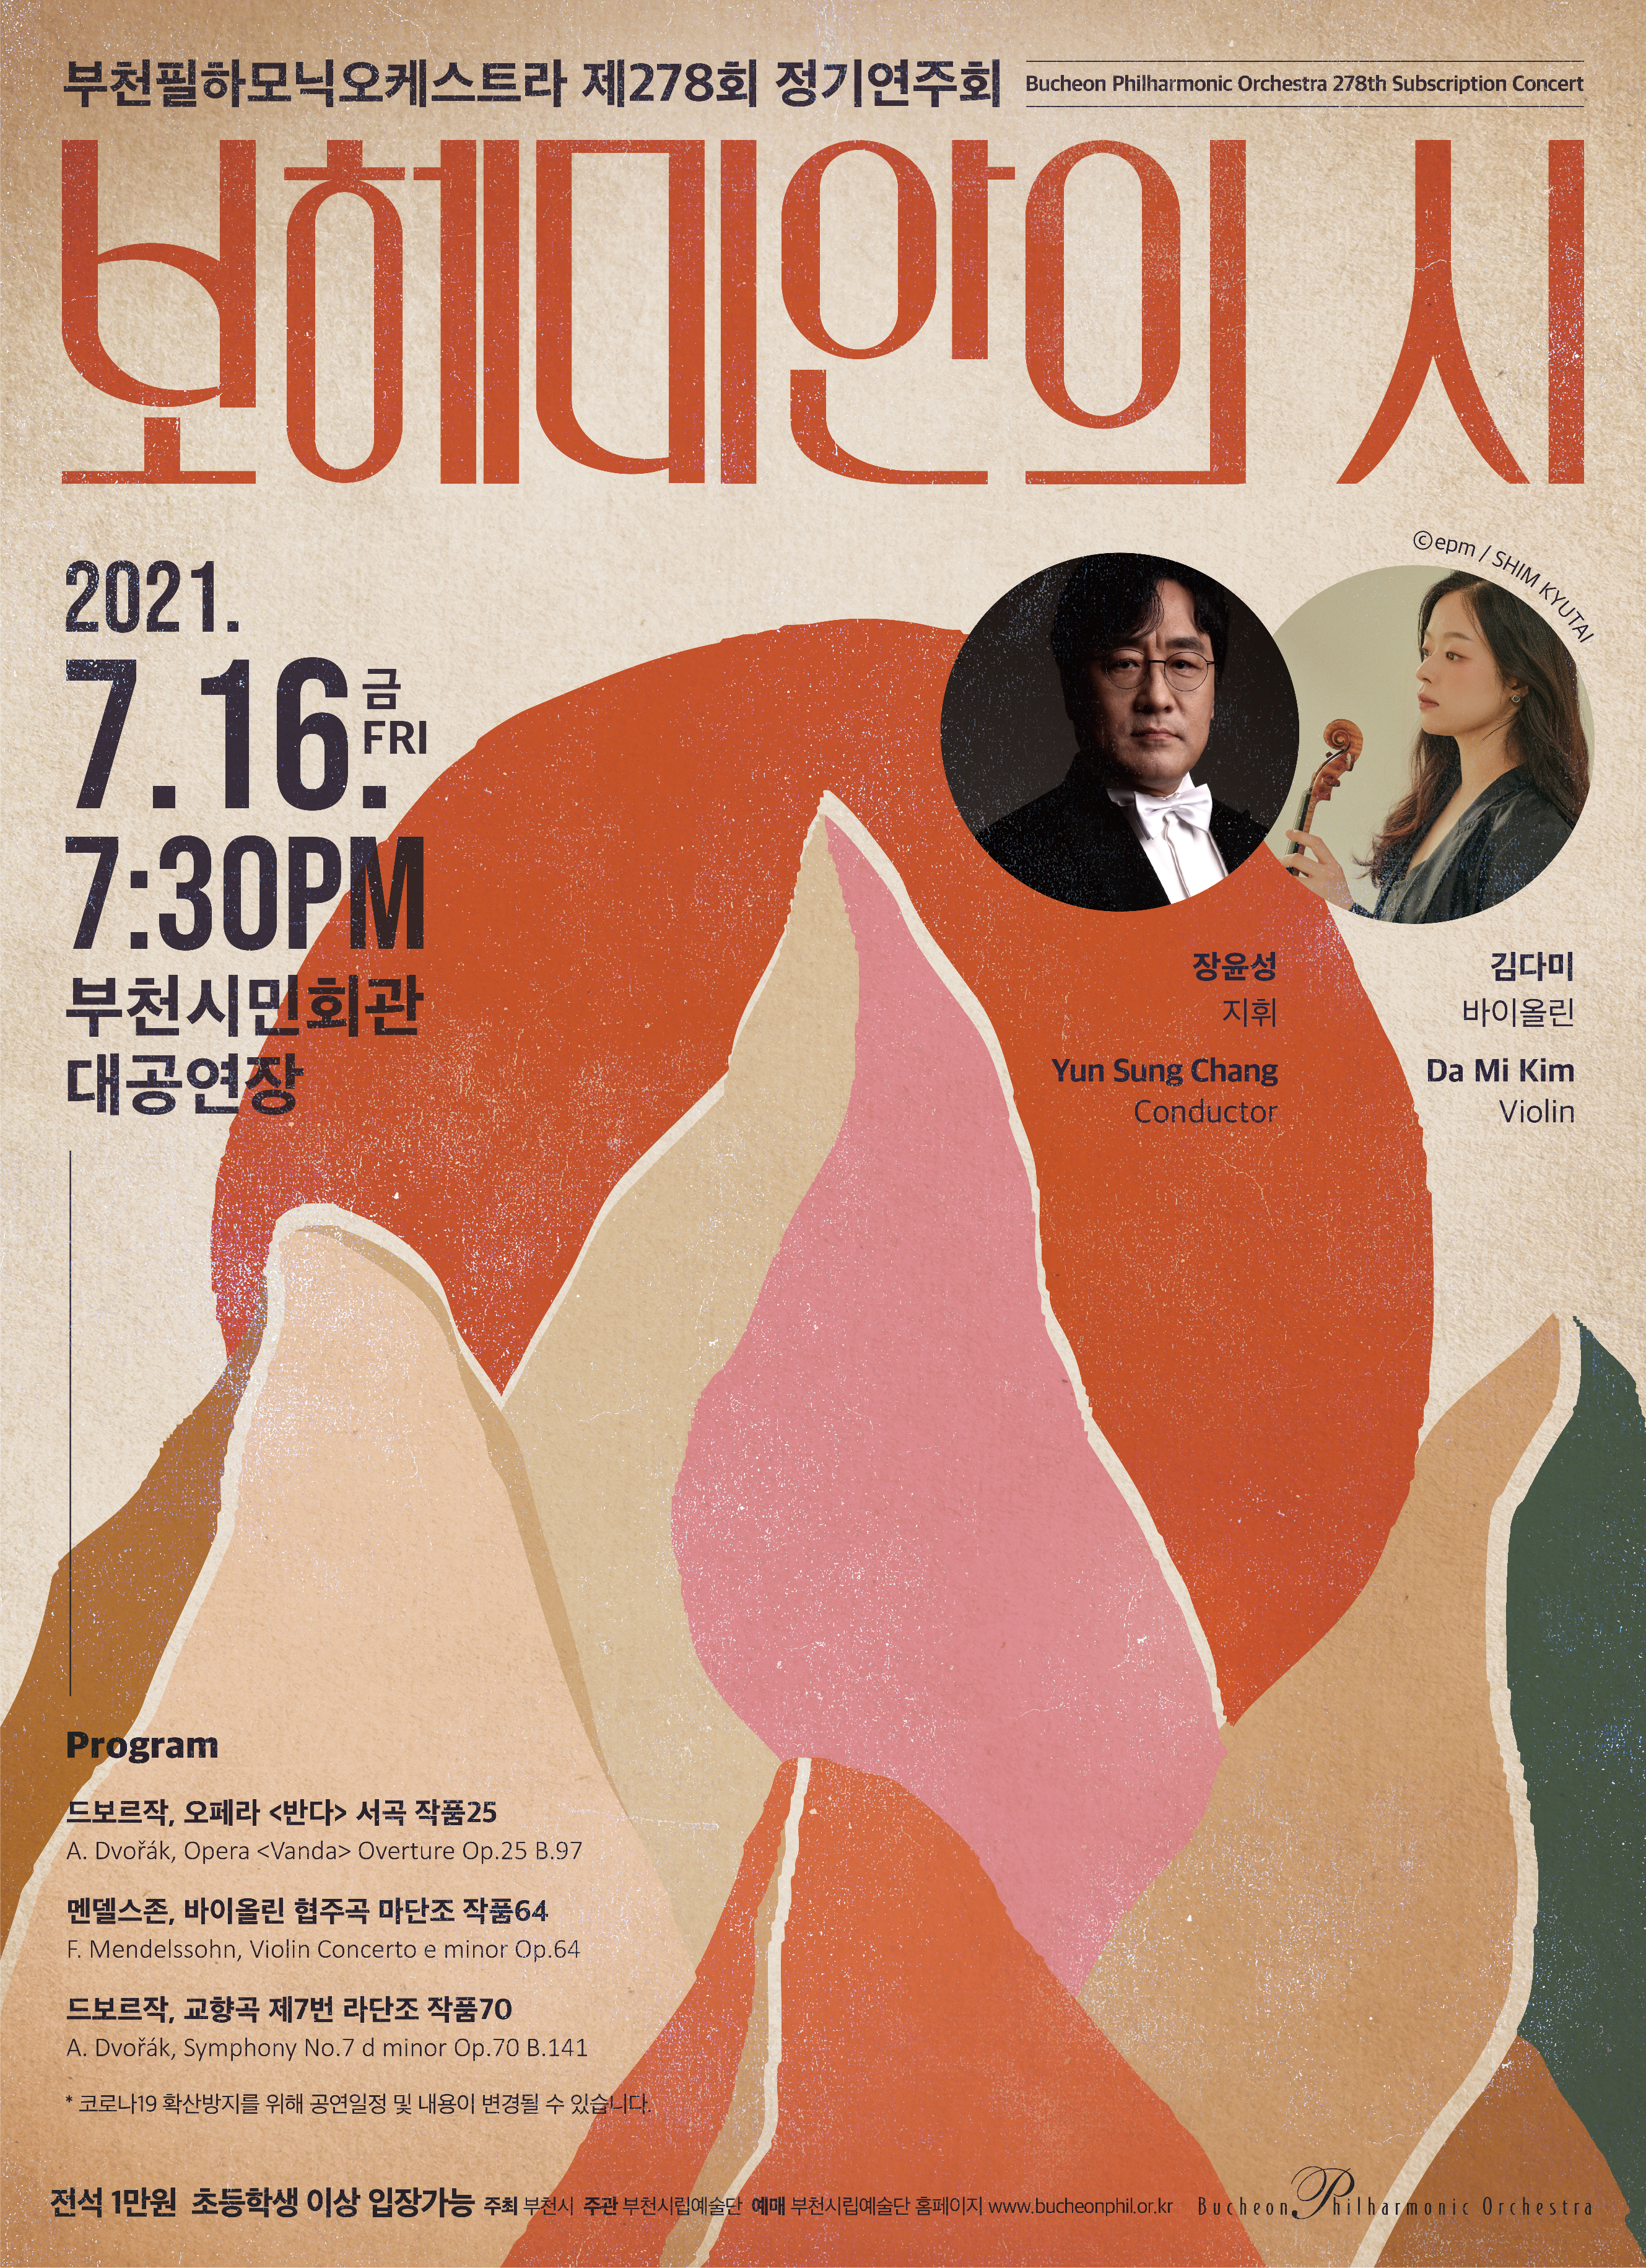 [7.16]Bucheon Philharmonic Orchestra 278th Subscription Concert